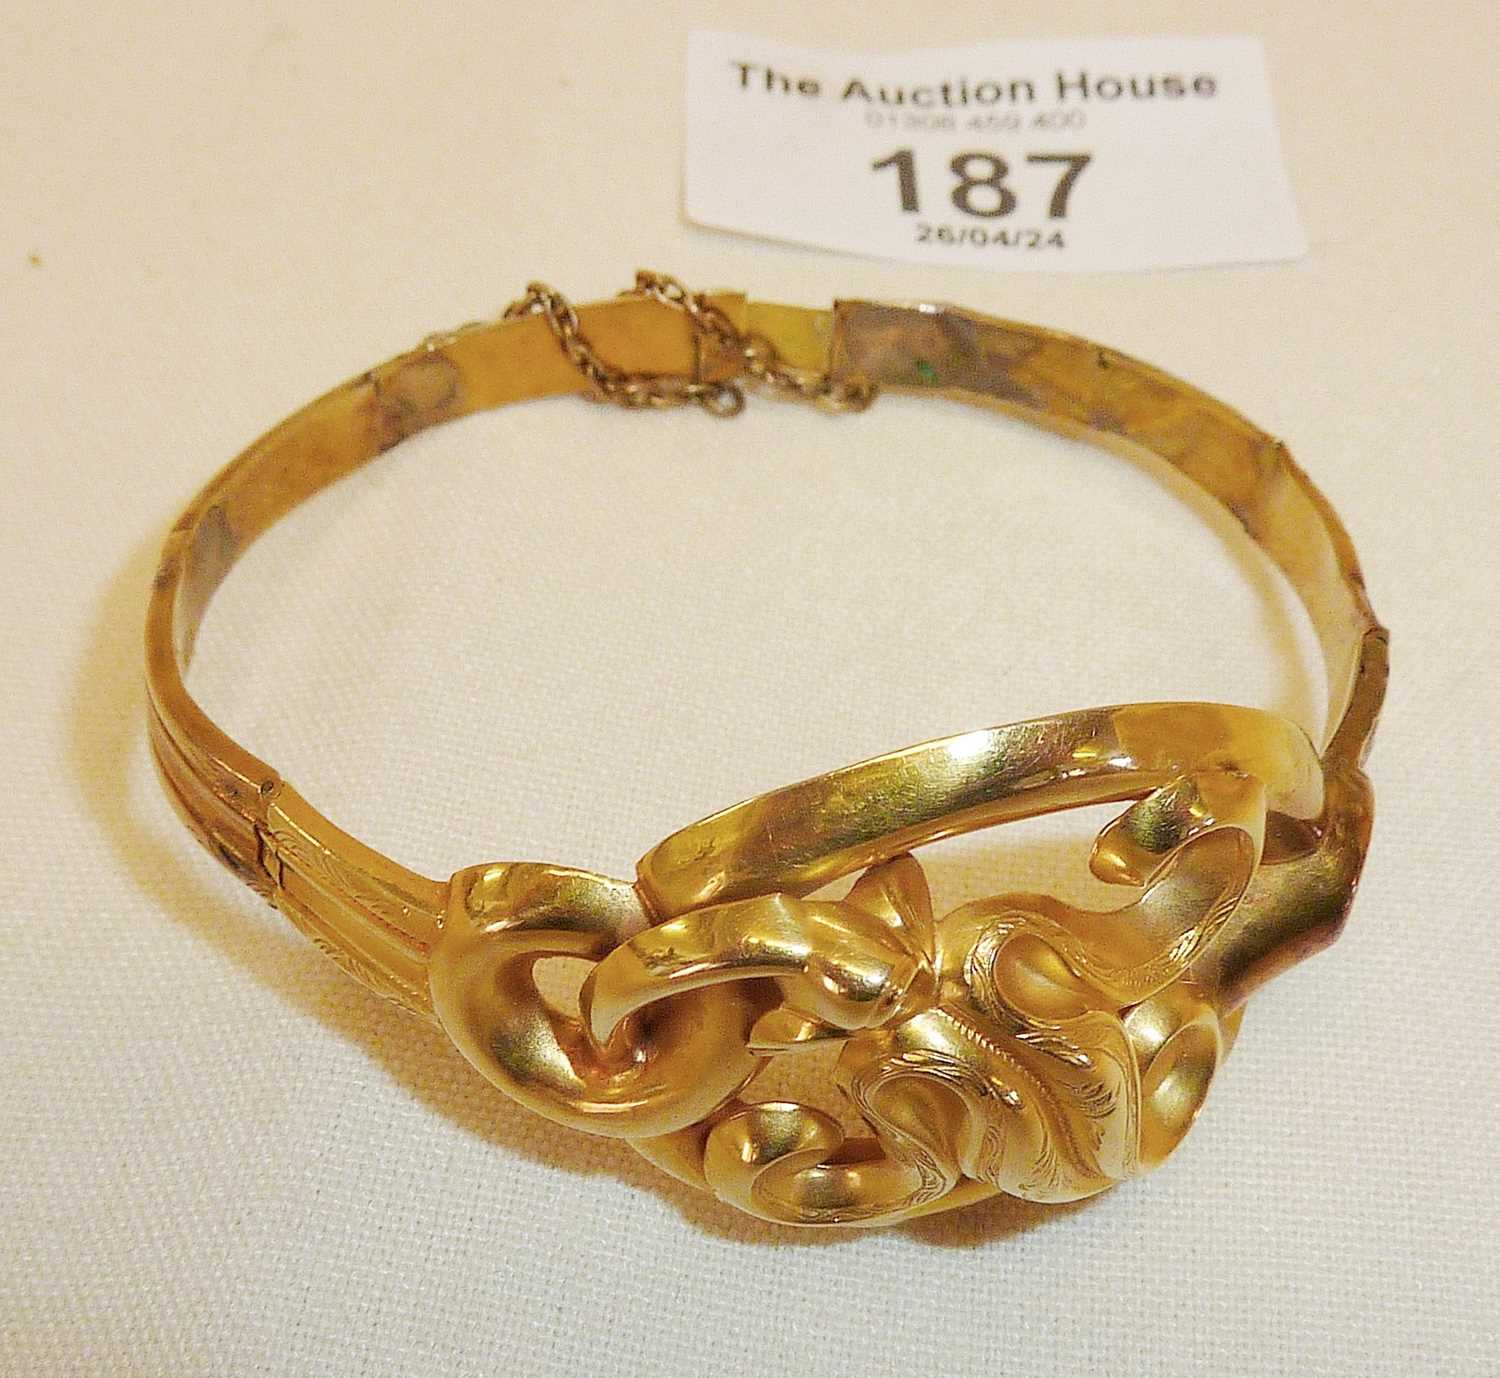 French 18ct gold Belle Epoque Art Nouveau style 19th c. bracelet, some repairs, has eagle's head